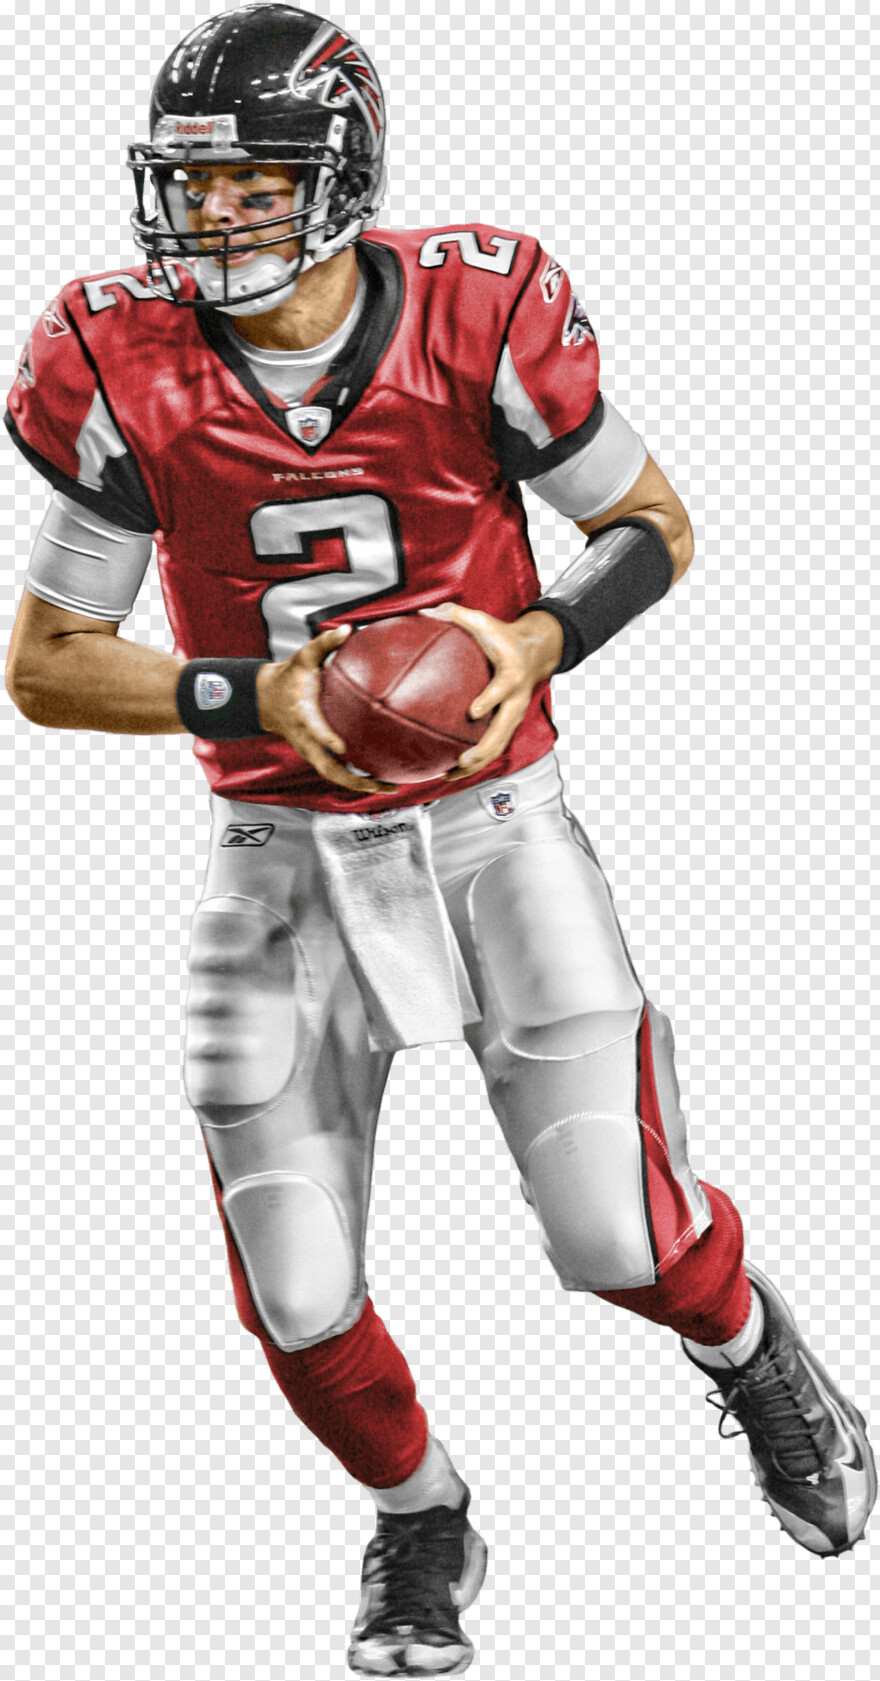  Atlanta Falcons, American Football Player, Football Player Silhouette, Atlanta Falcons Helmet, Atlanta Falcons Logo, Football Player